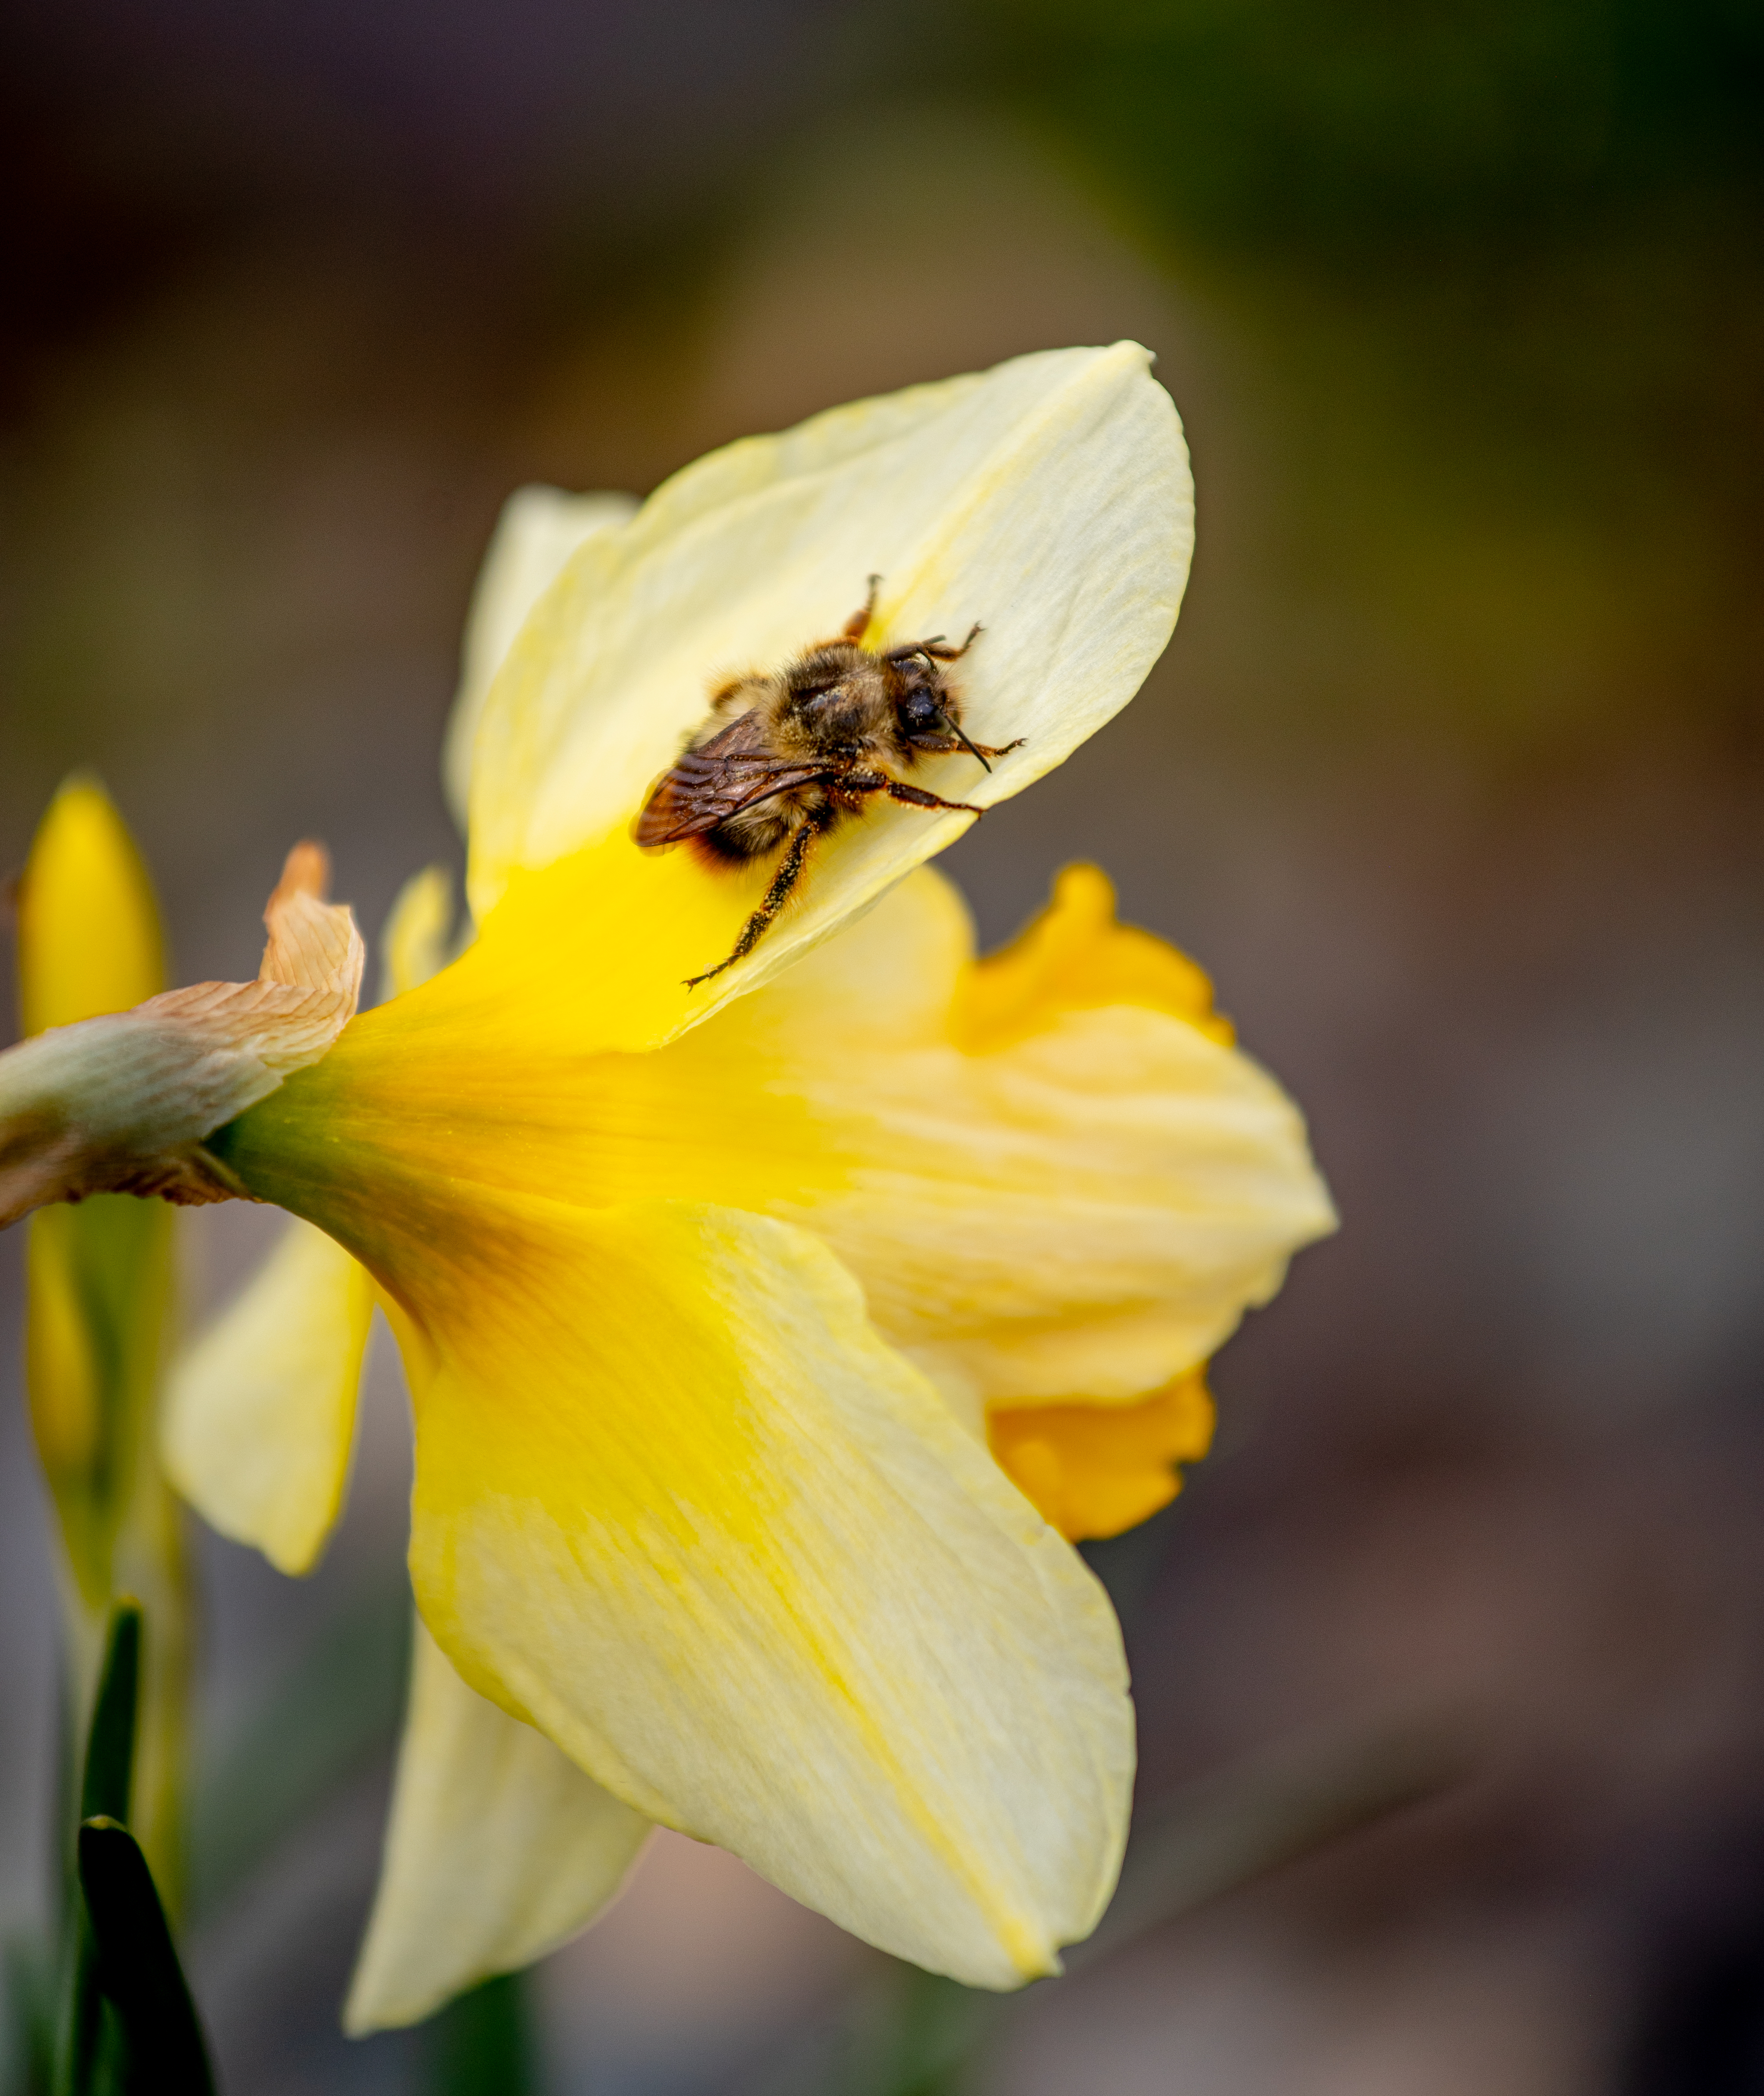 a bee crawls on a yellow flower petal